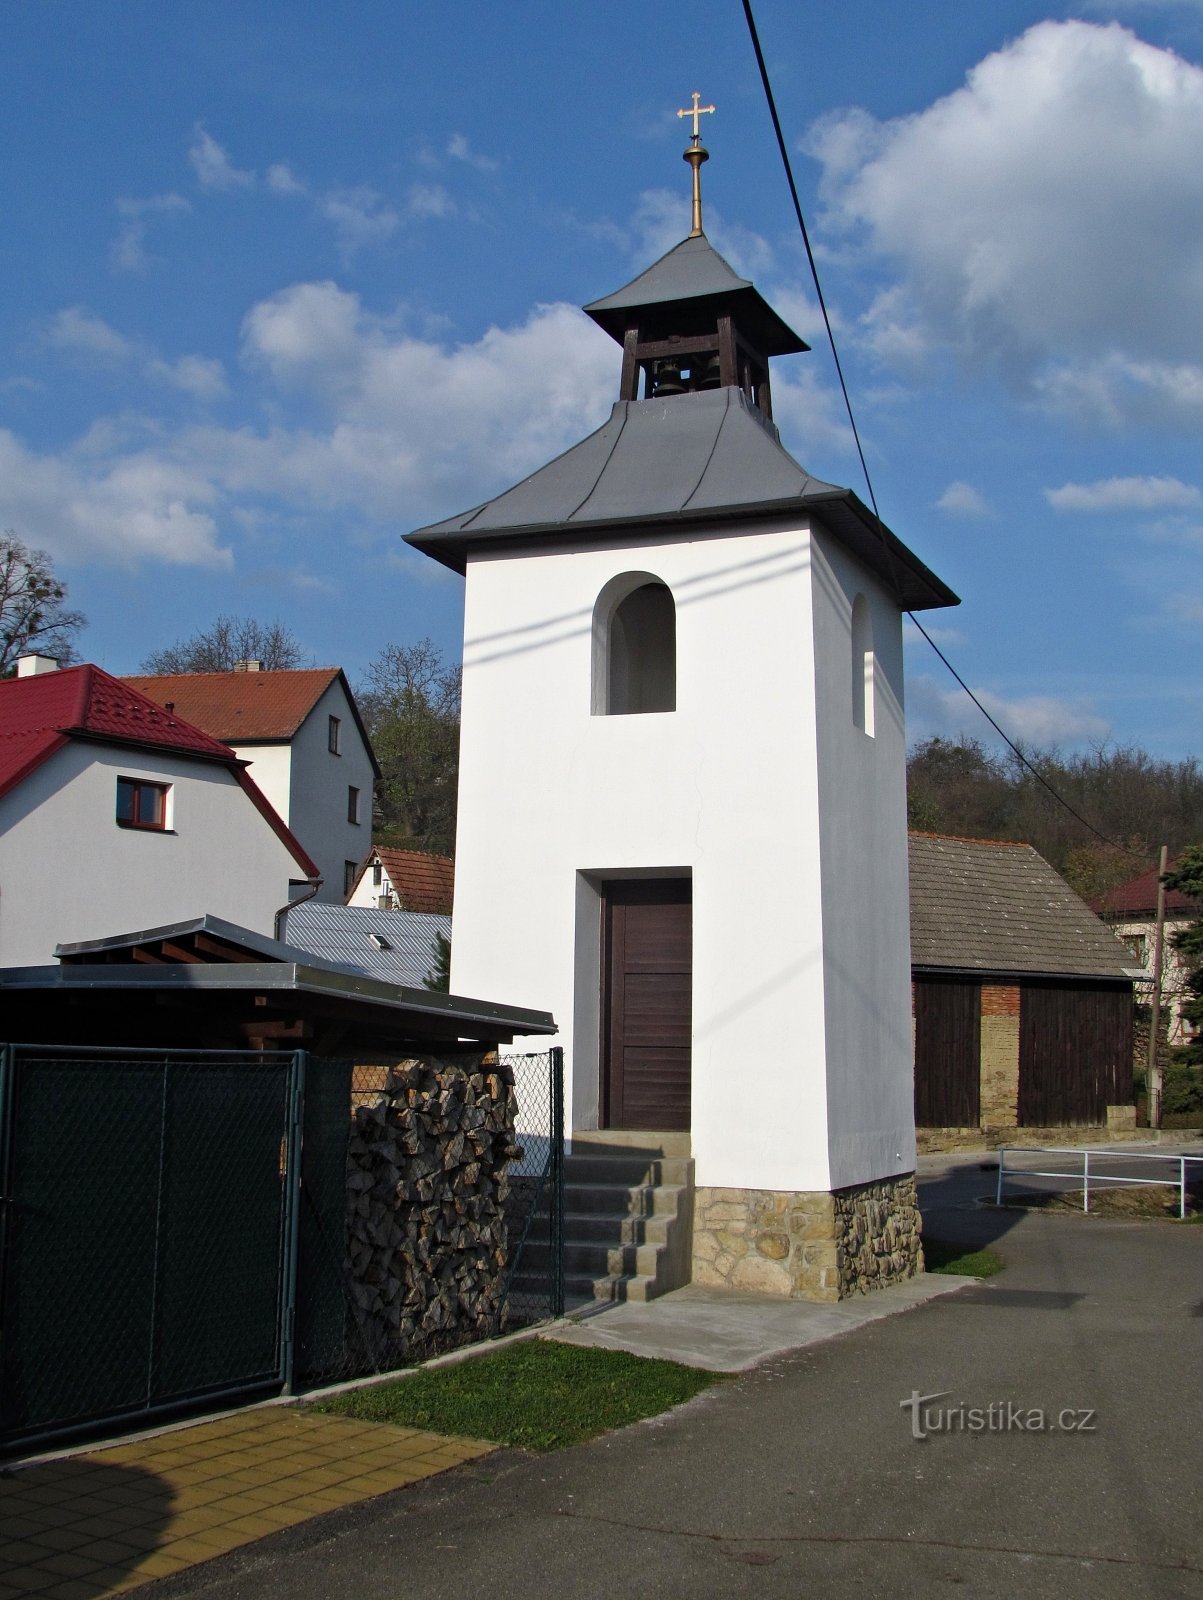 Ludkovice - μνημεία στο κέντρο του χωριού